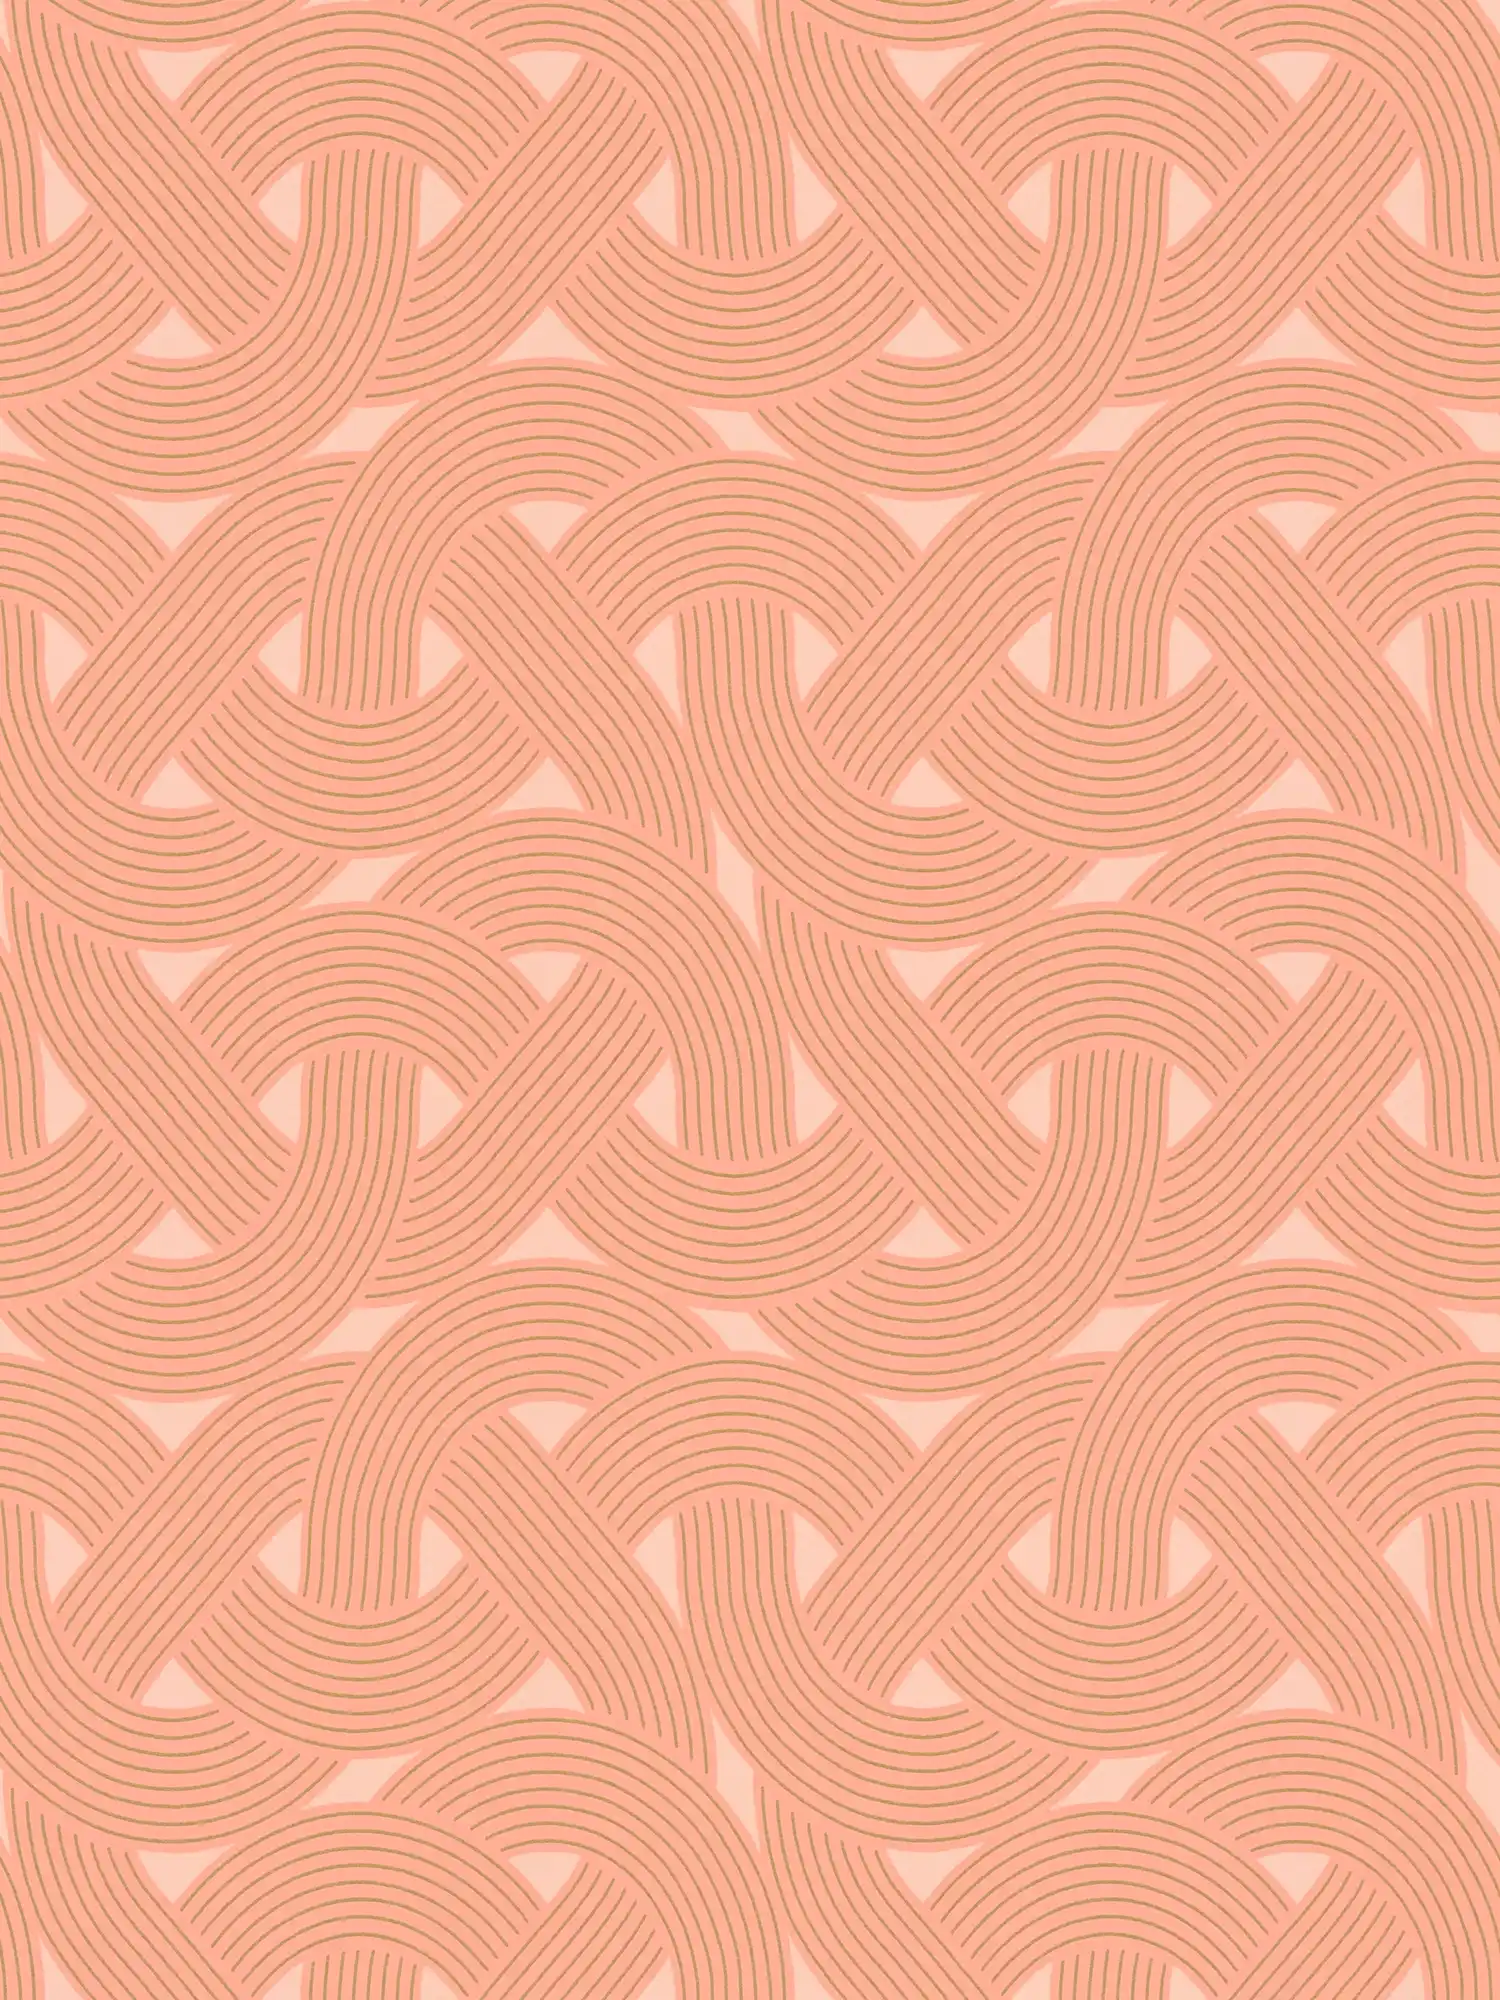 Patrón de líneas gráficas de estilo art déco - naranja, cobre
